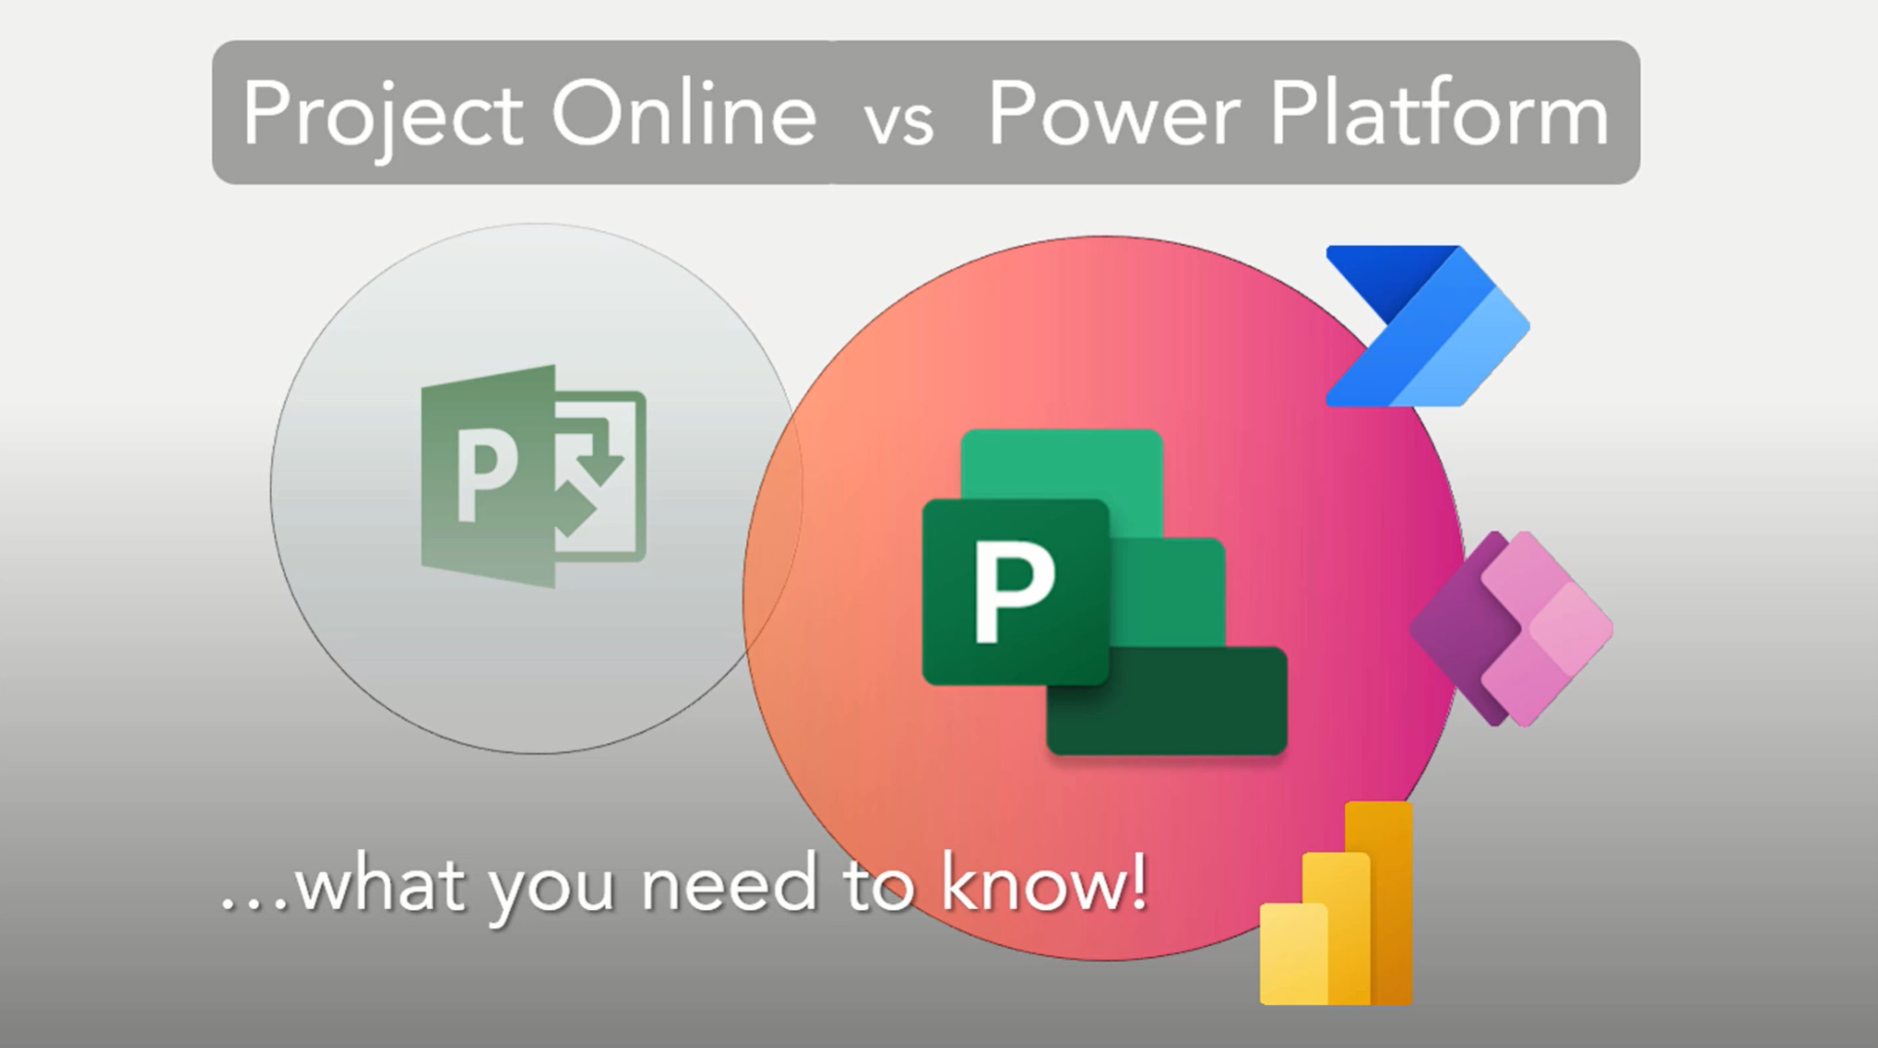 Project Online vs Power Platform